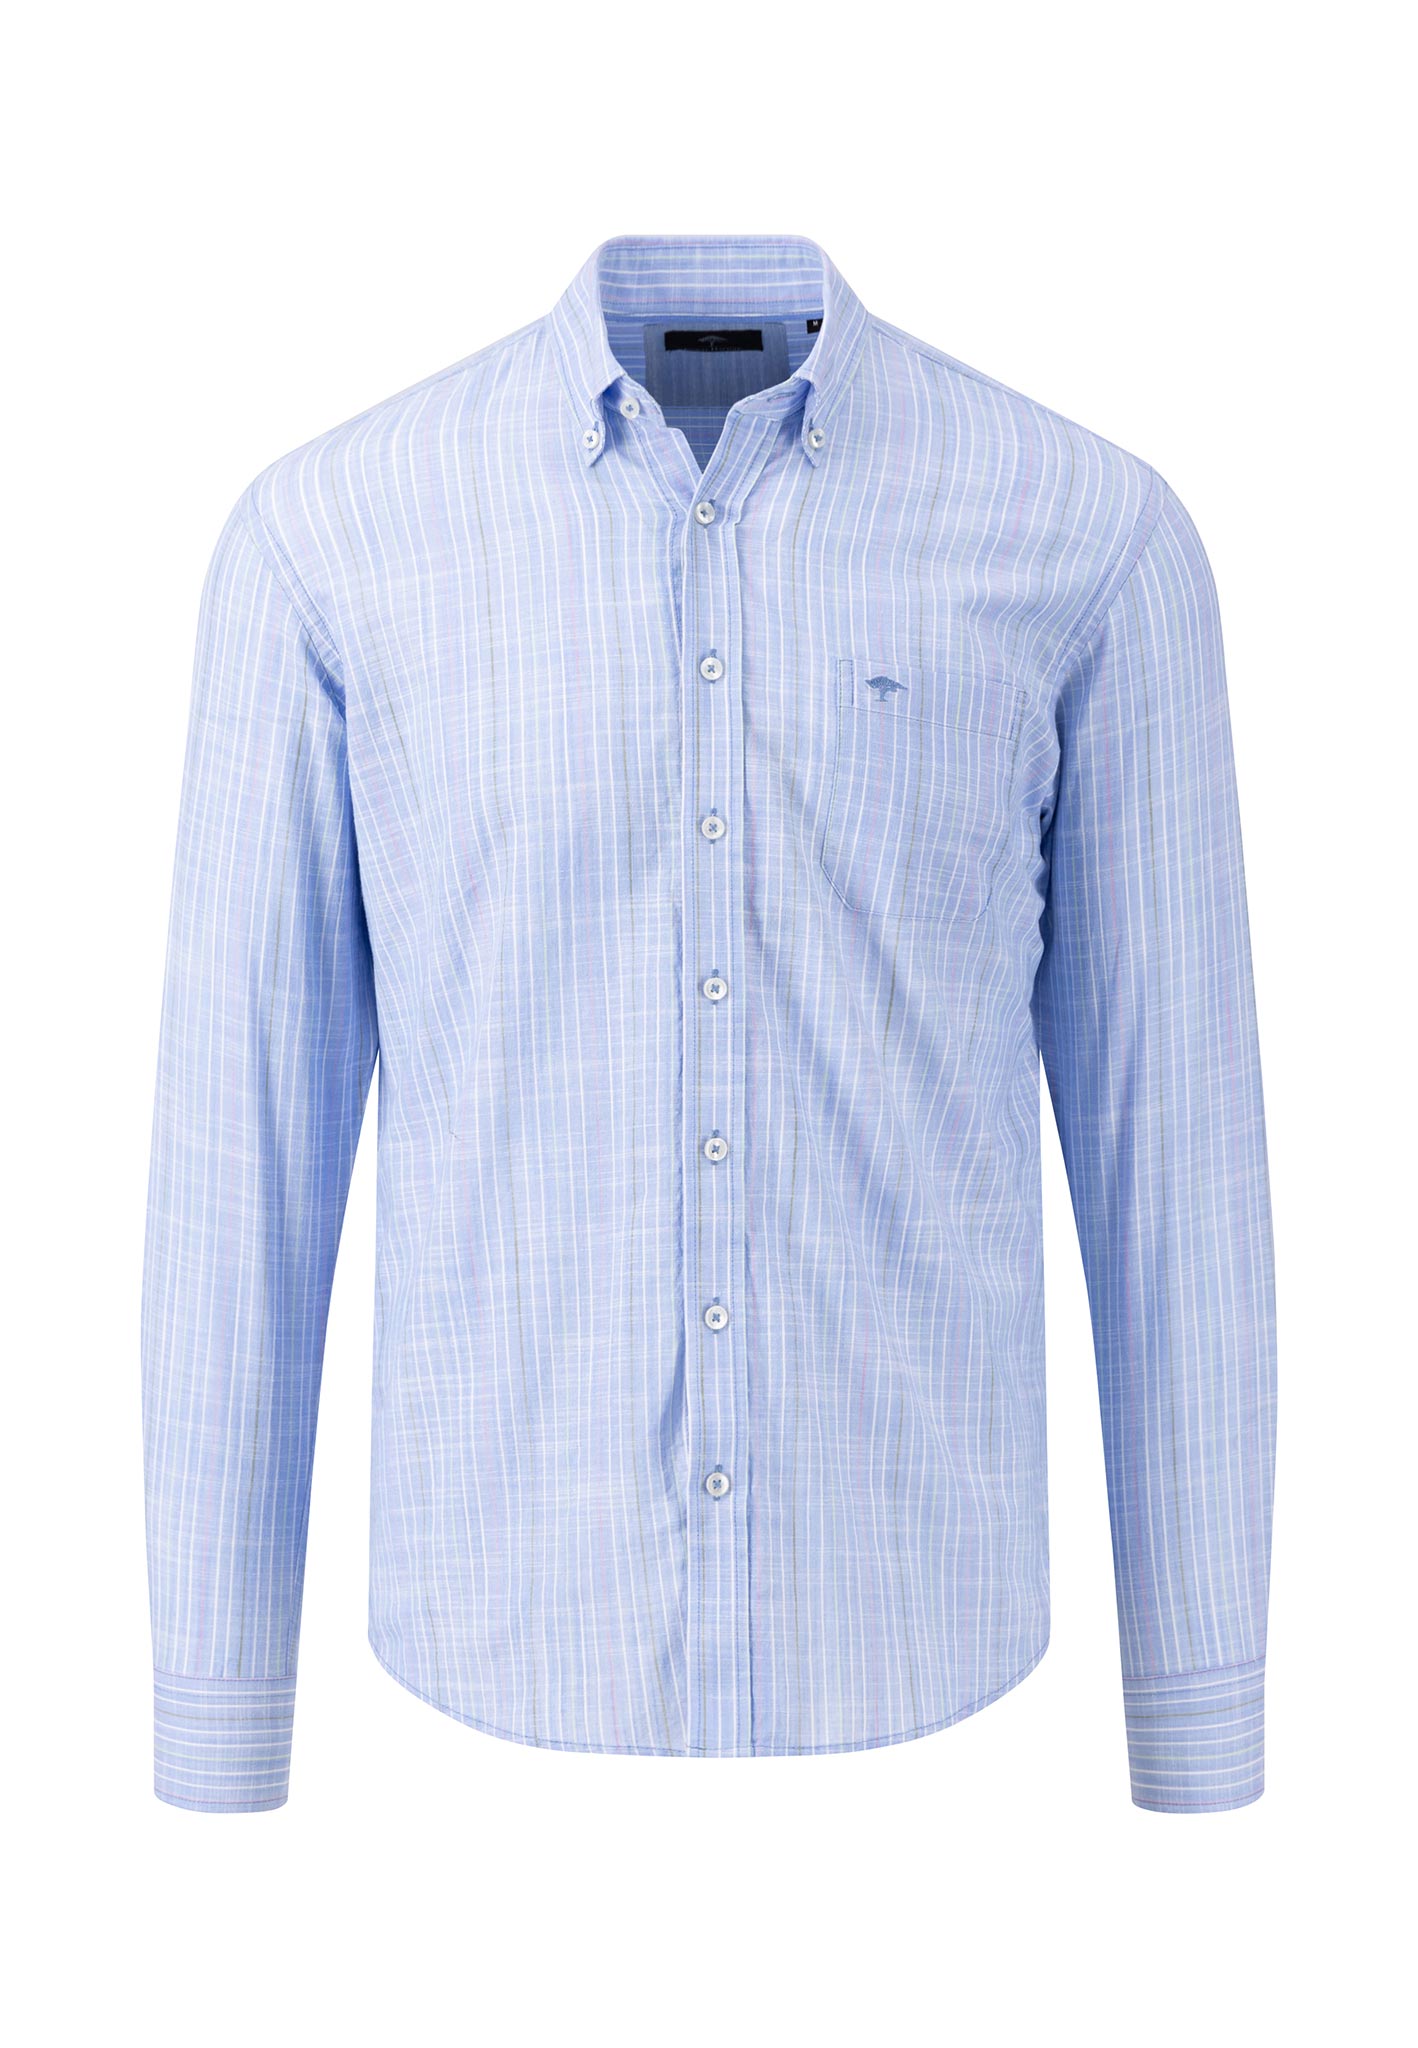 Fynch Hatton Soft Washed Cotton Shirt Blue